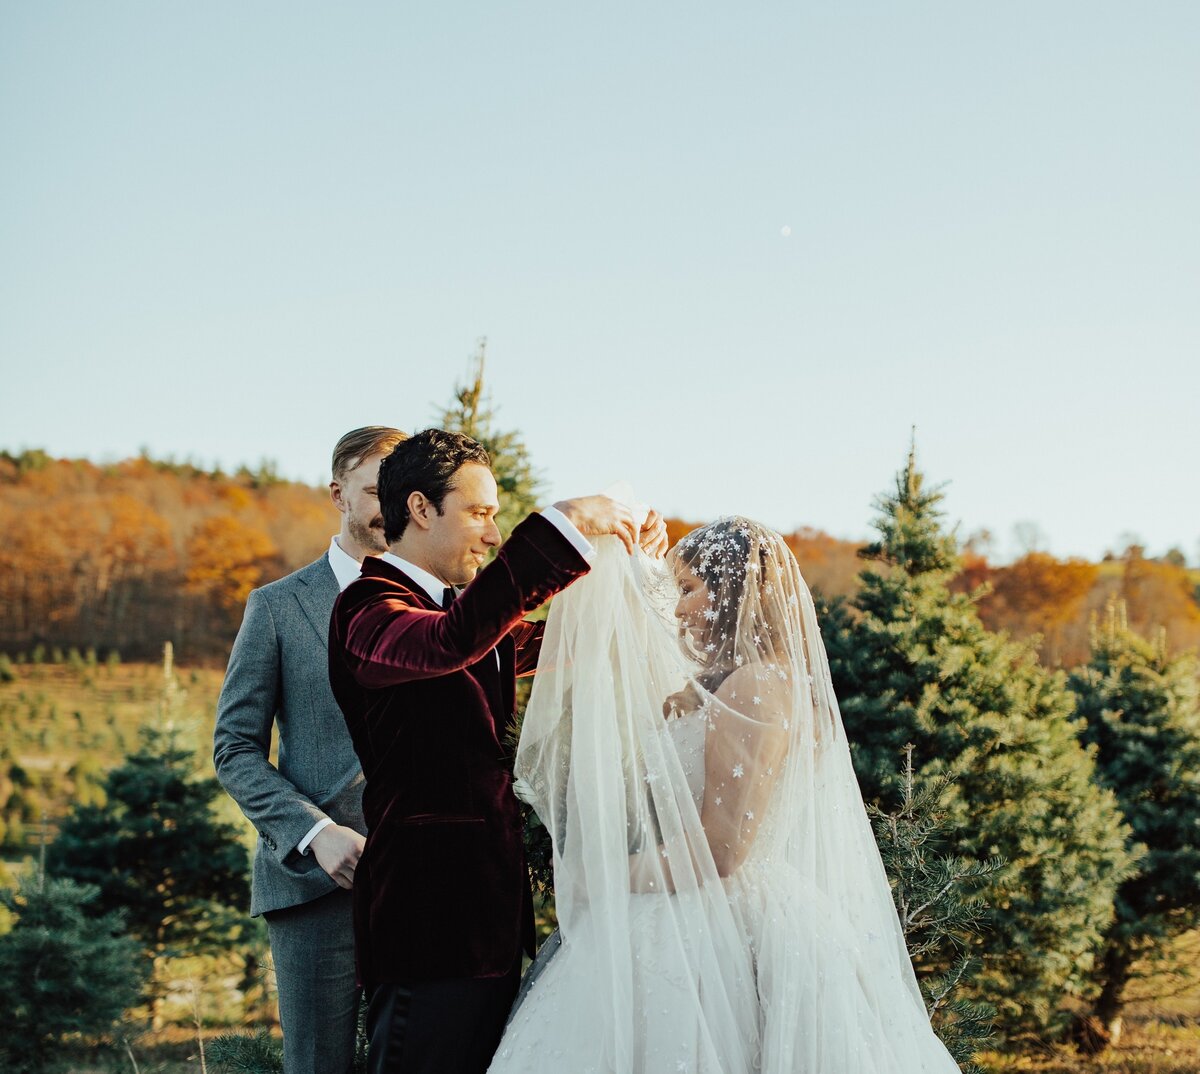 Christy-l-Johnston-Photography-Monica-Relyea-Events-Noelle-Downing-Instagram-Noelle_s-Favorite-Day-Wedding-Battenfelds-Christmas-tree-farm-Red-Hook-New-York-Hudson-Valley-upstate-november-2019-IMG_6616